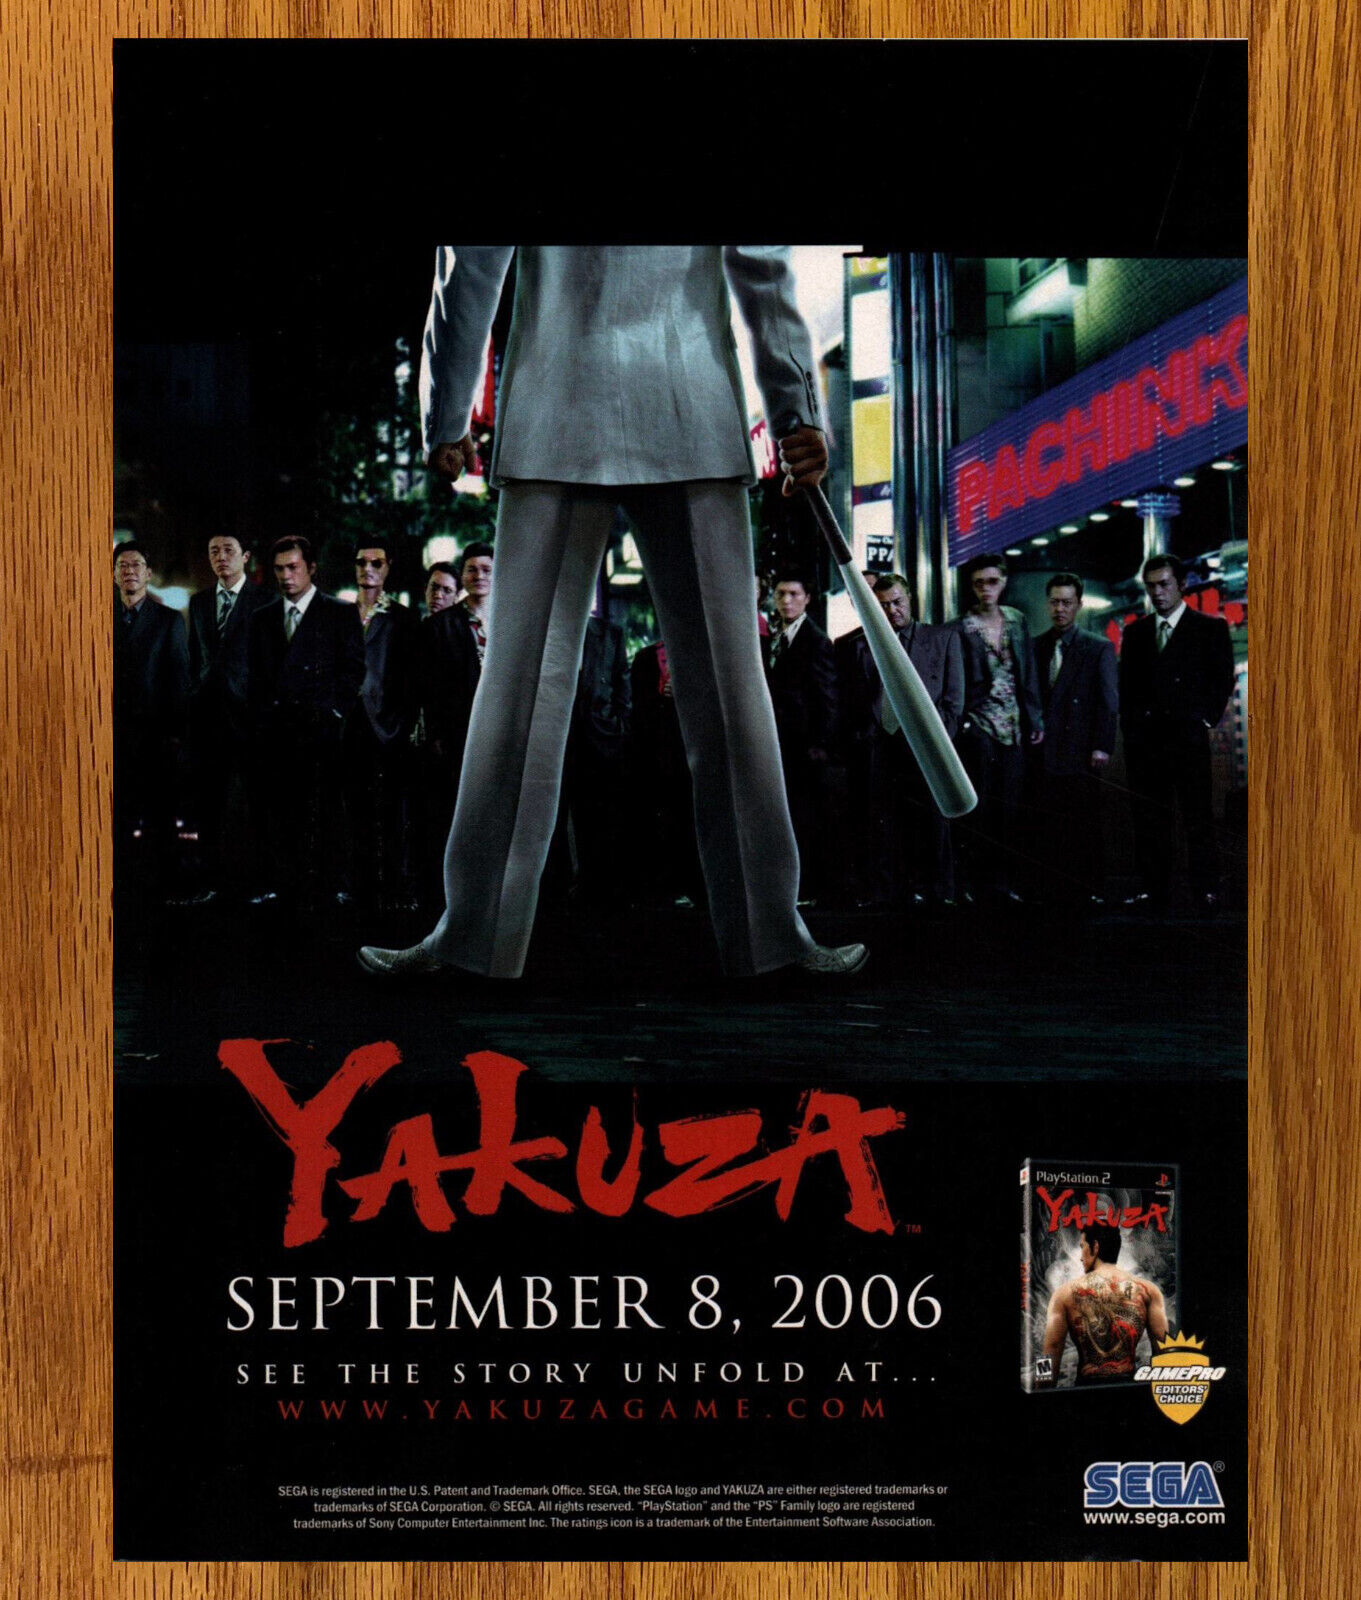 Yakuza Japanese Mafia SEGA - Video Game Print Ad / Poster Promo Art 2006